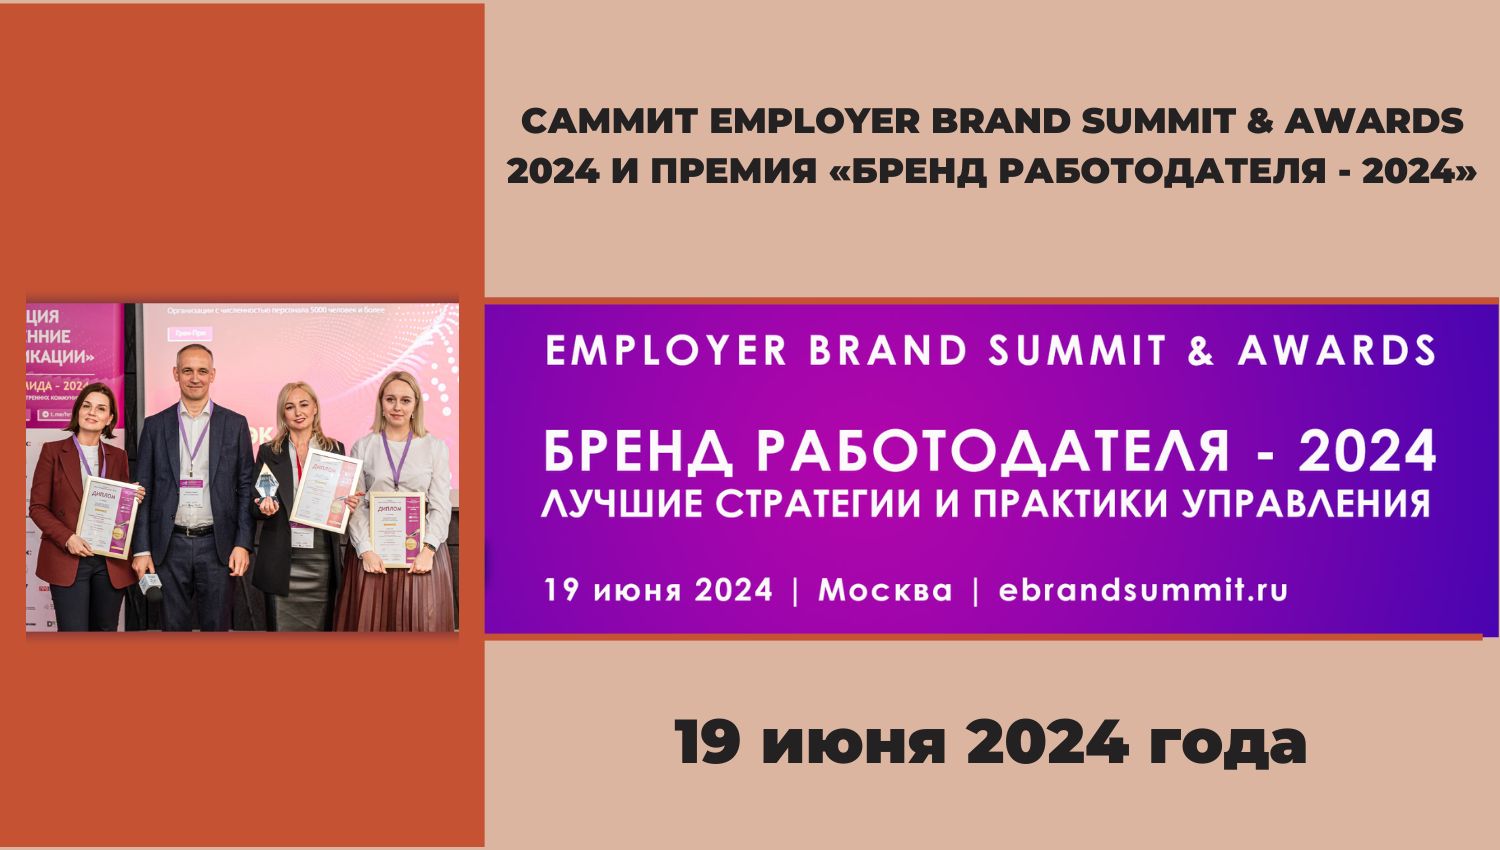 Саммит Employer Brand Summit & Awards 2024 и Премия «Бренд работодателя - 2024»